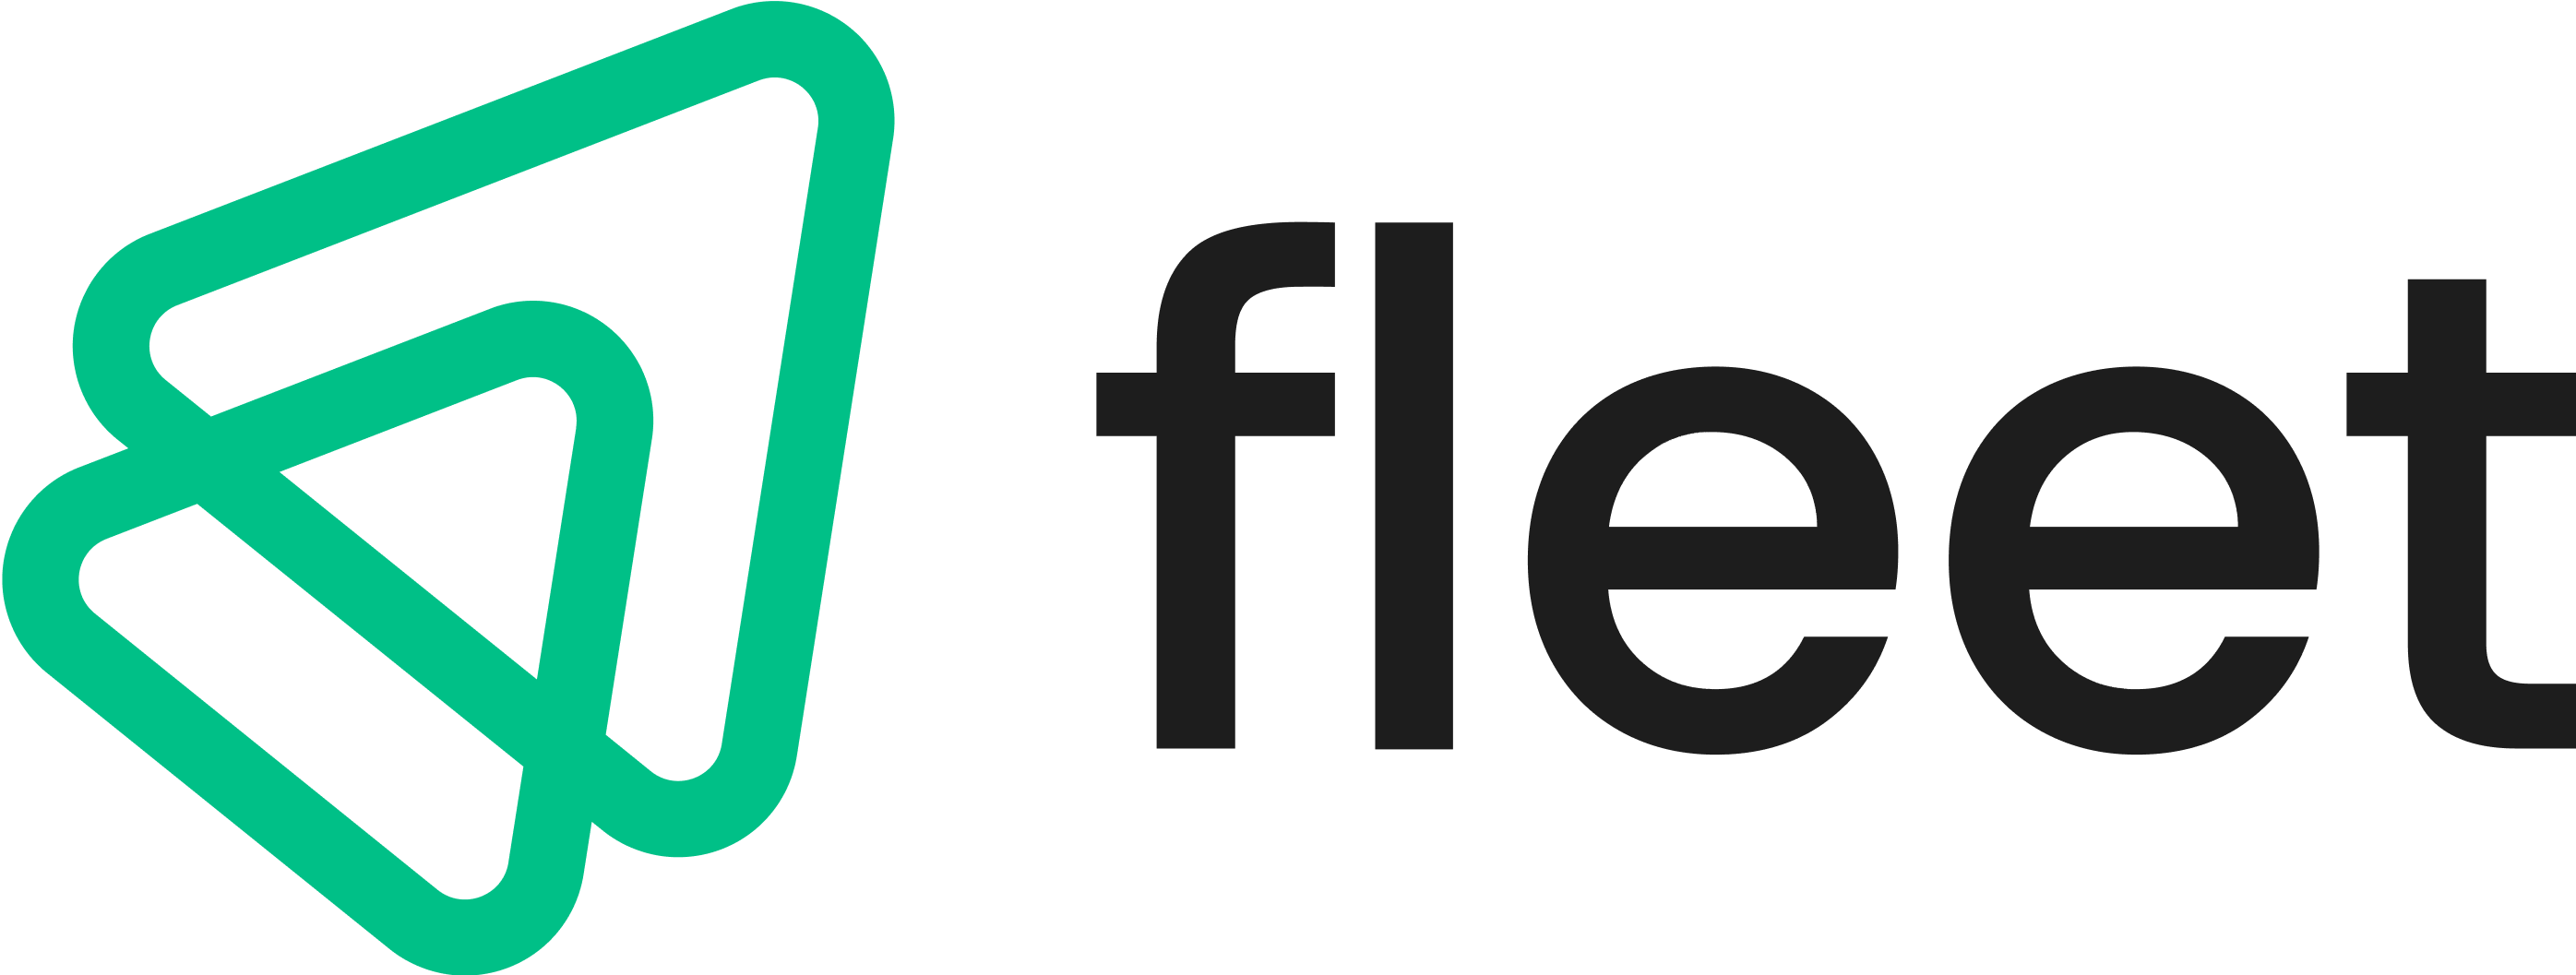 fleet_new logo_1